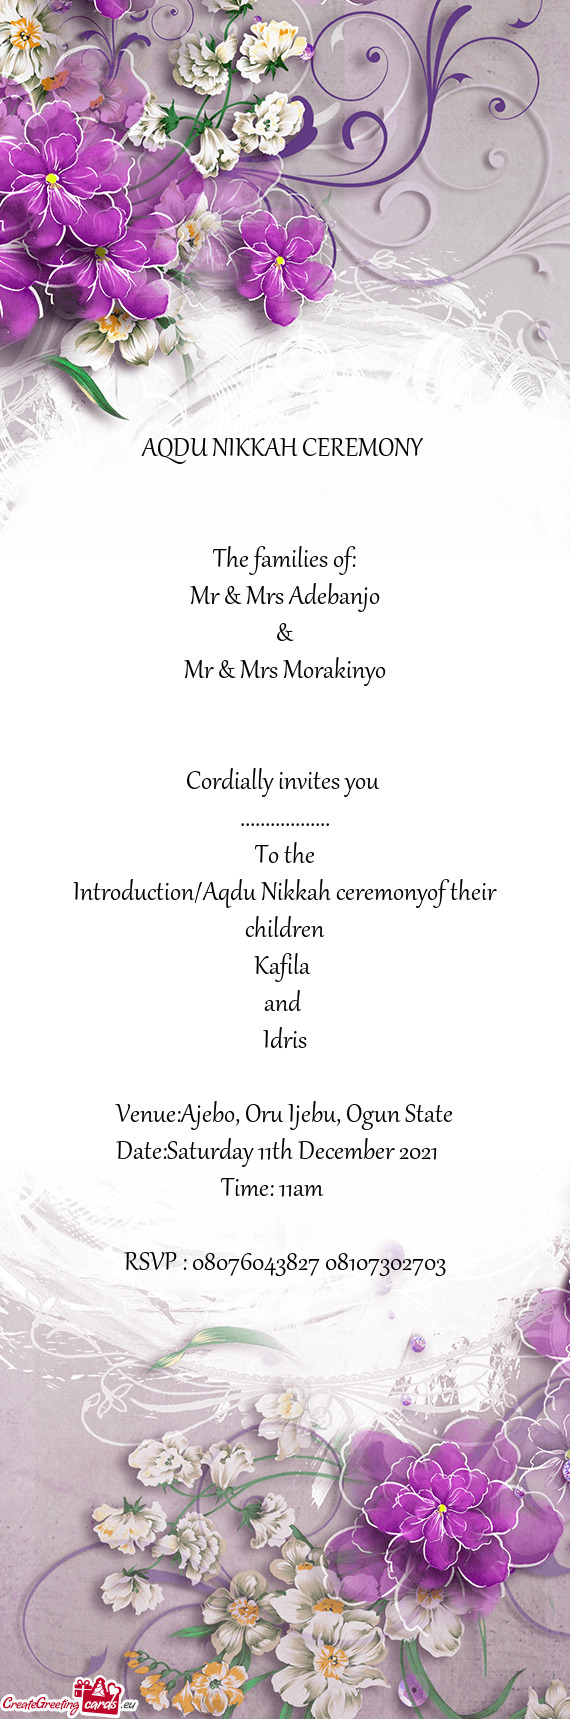 Introduction/Aqdu Nikkah ceremonyof their children